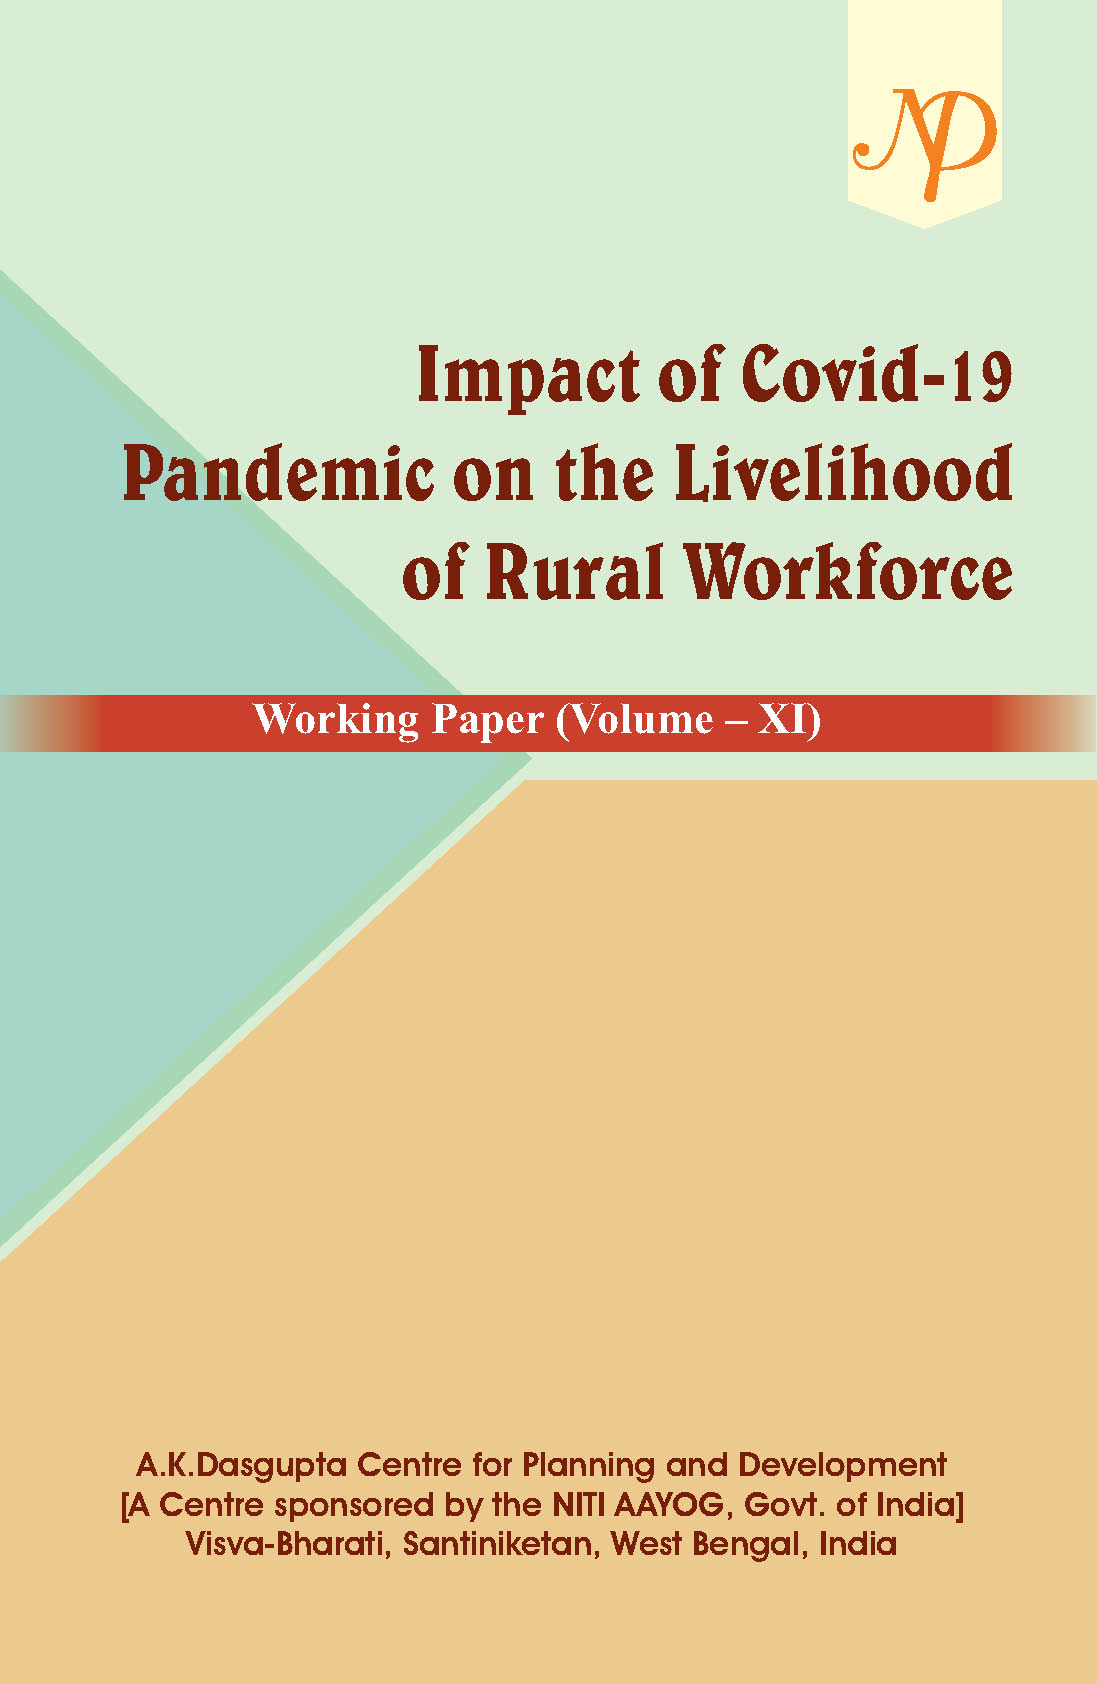 Impact of Covid-19 Pandemic on the livelihood of Rural Workforce Cover.jpg